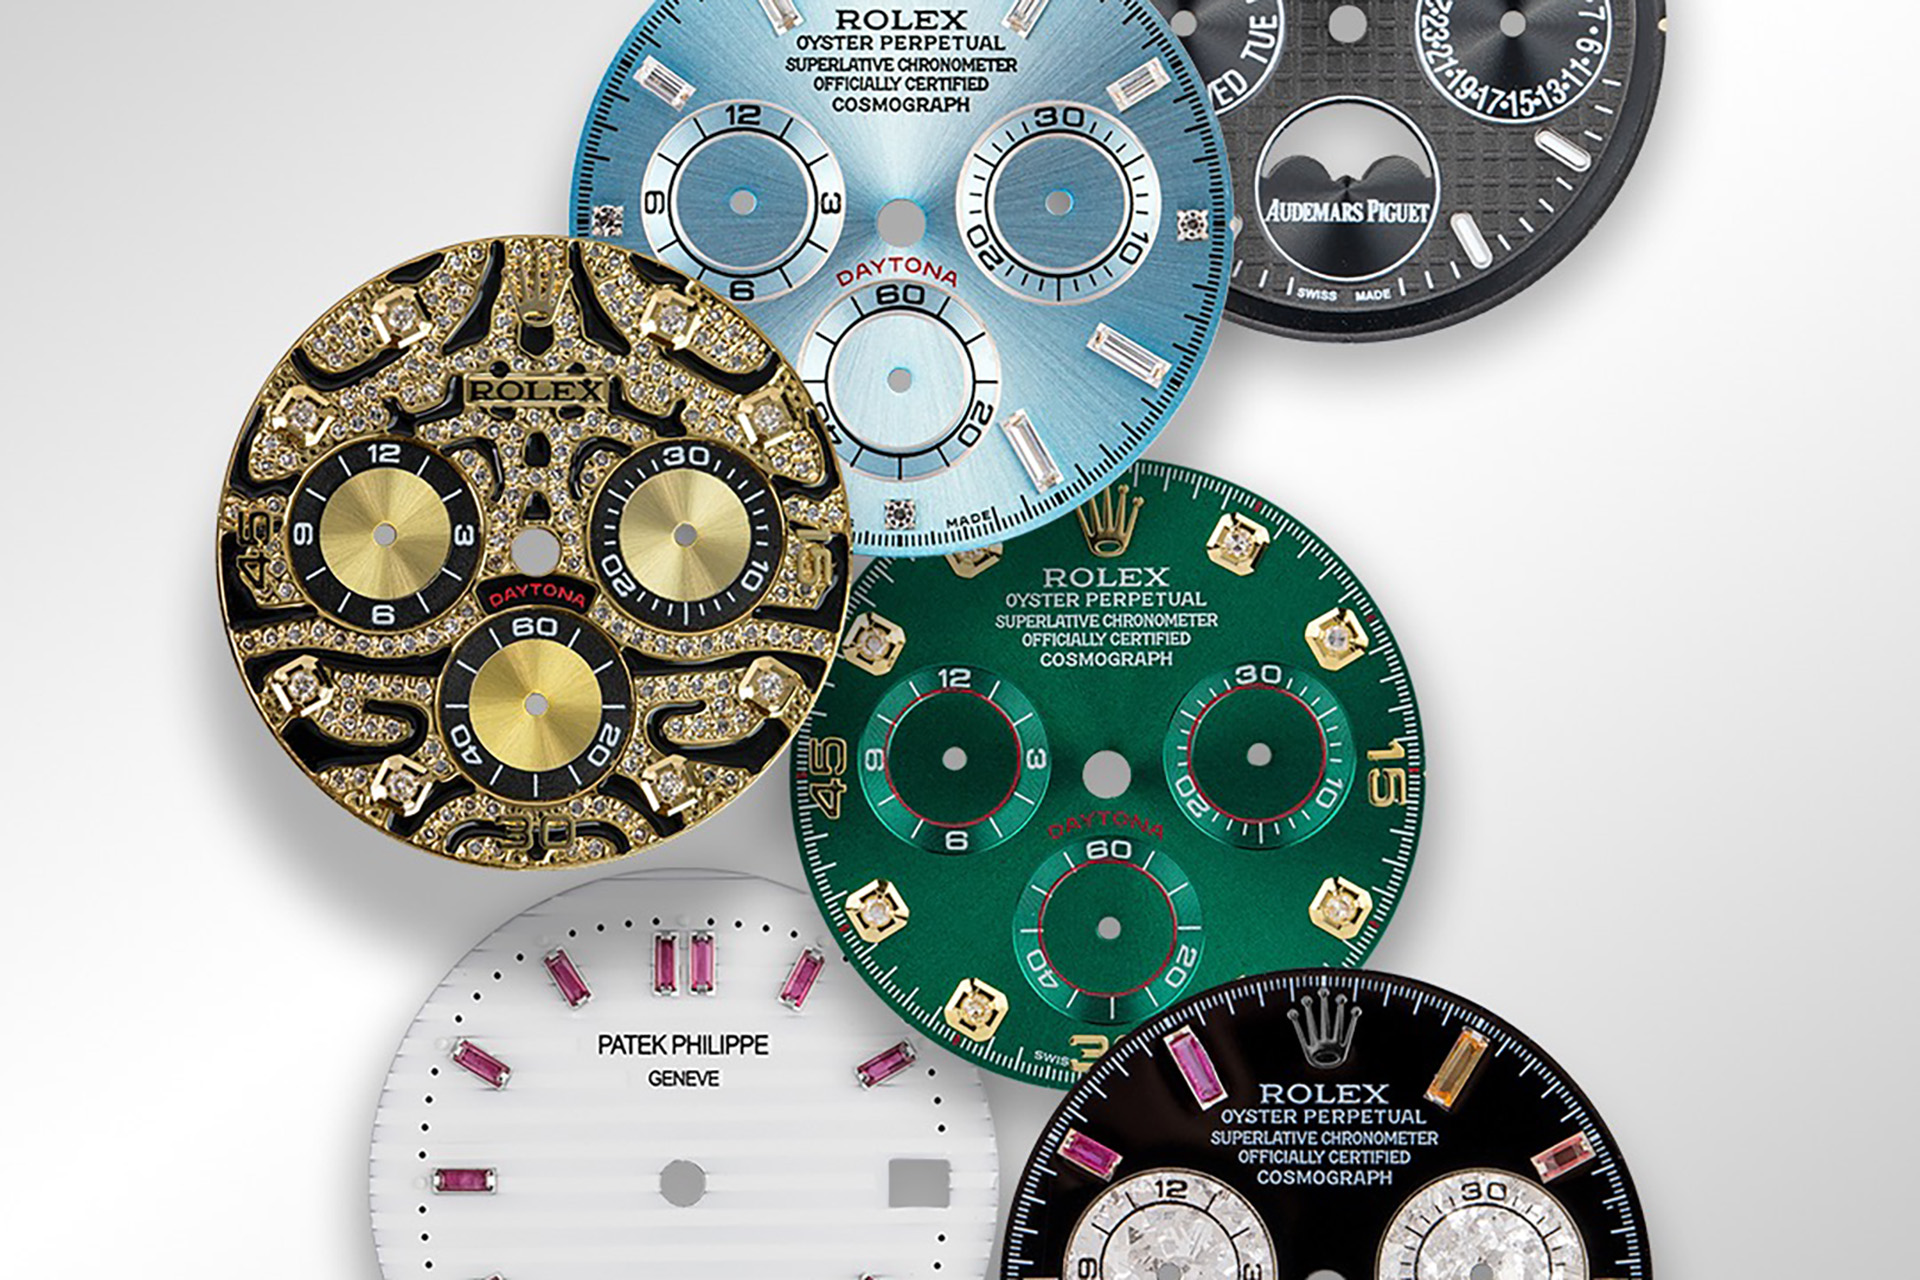 5 Ways to Customize Your Rolex Watch